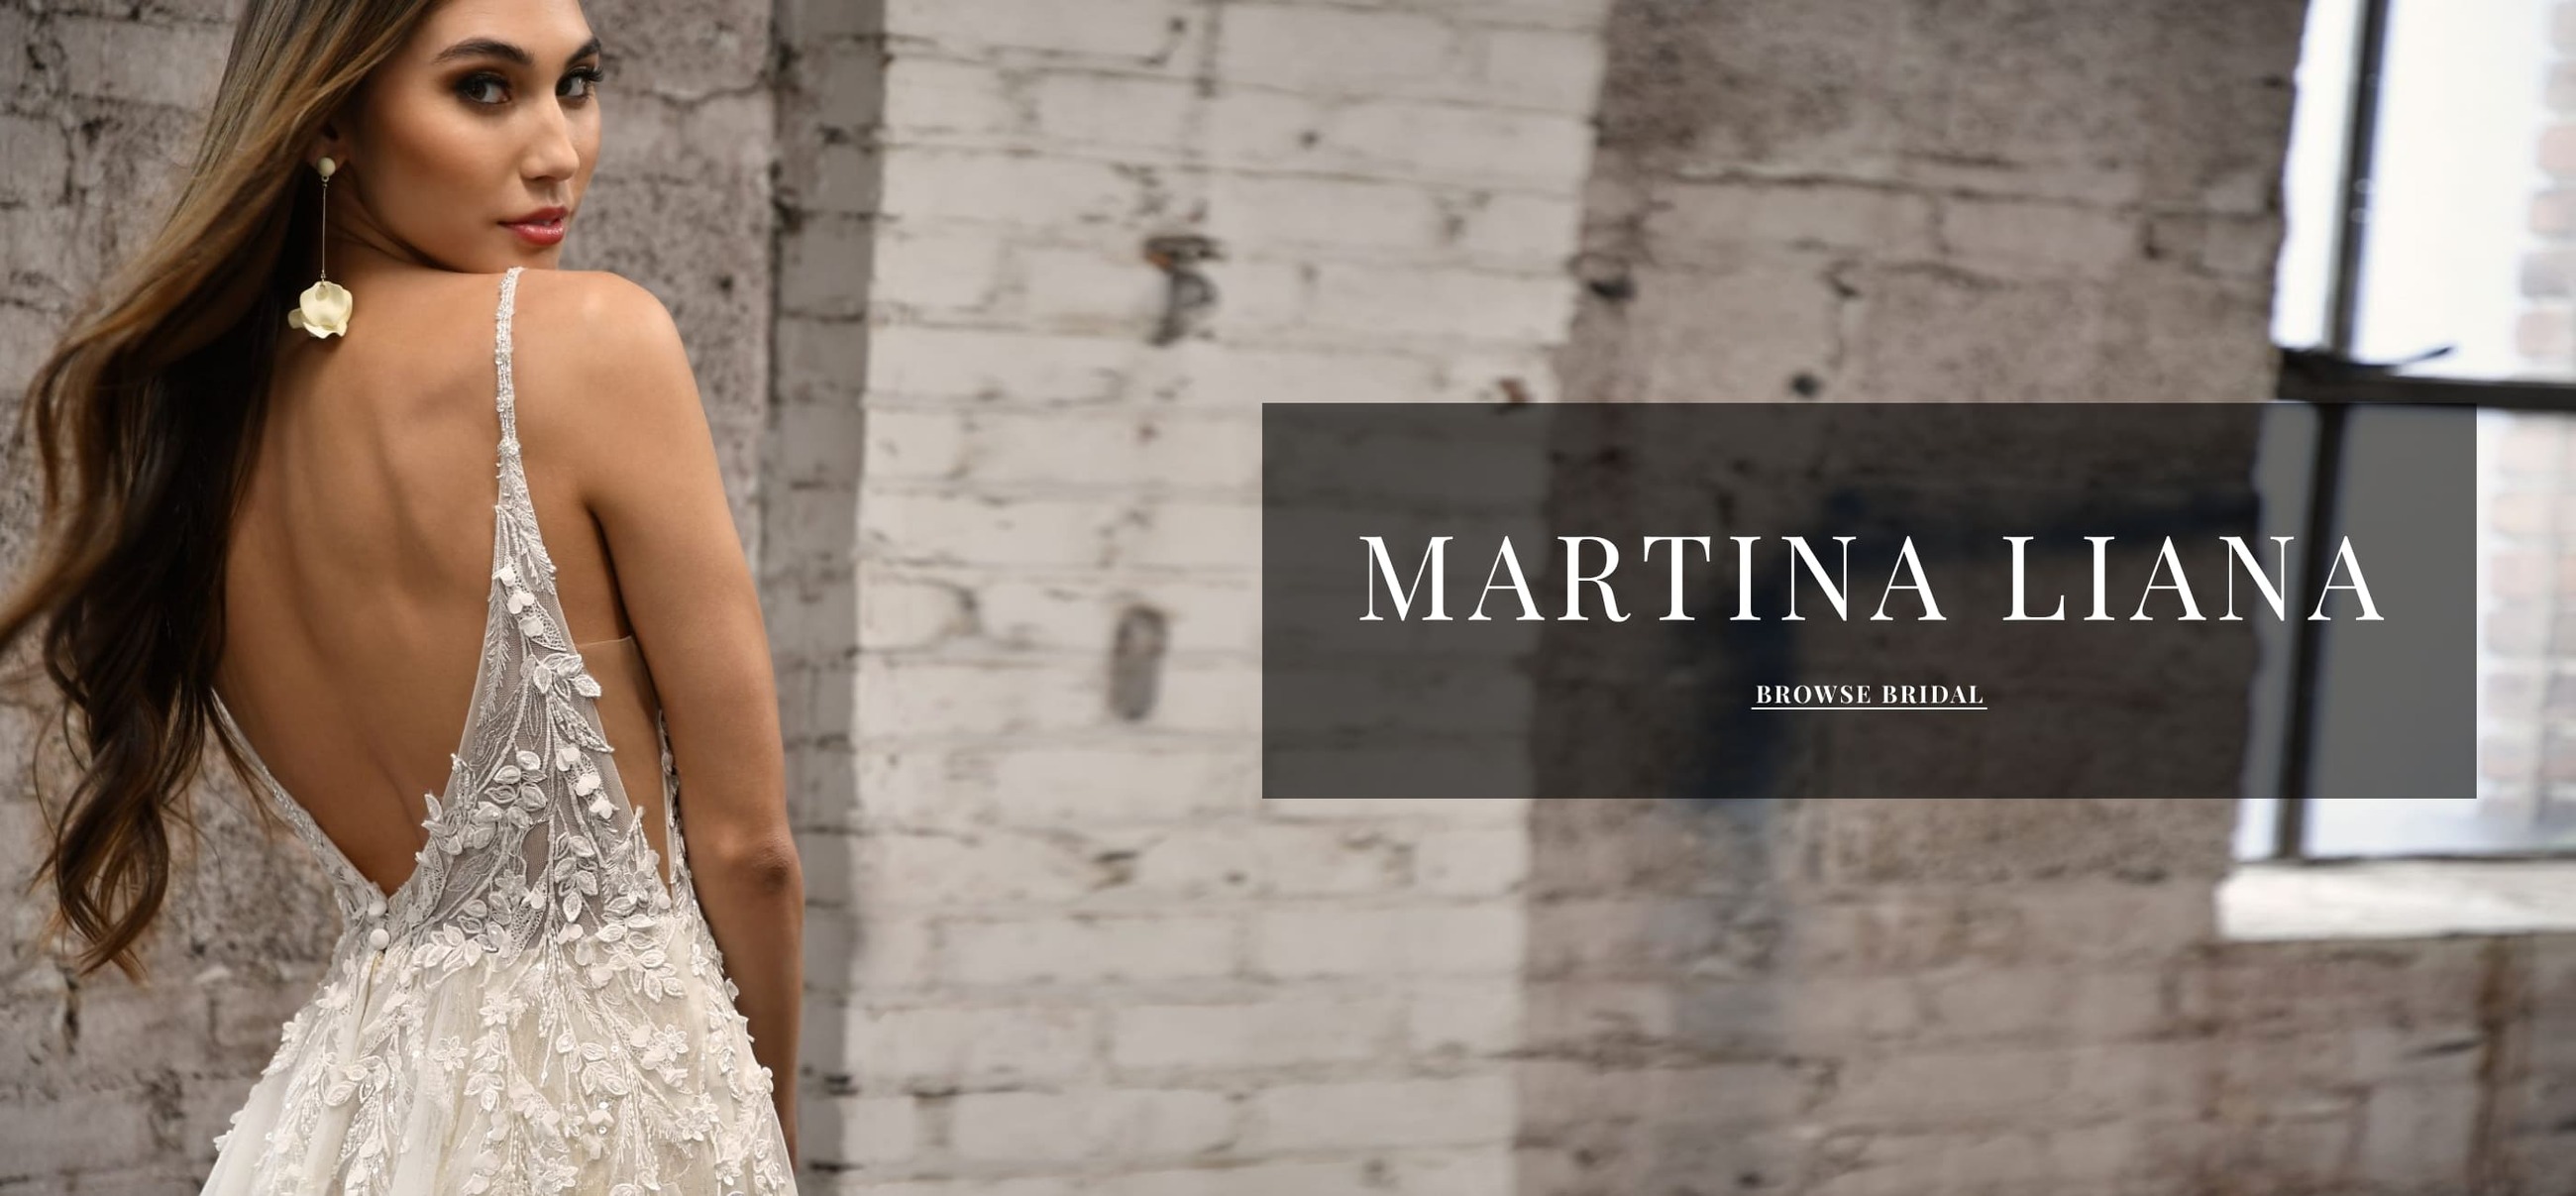 Martina Liana Desktop for Bridal